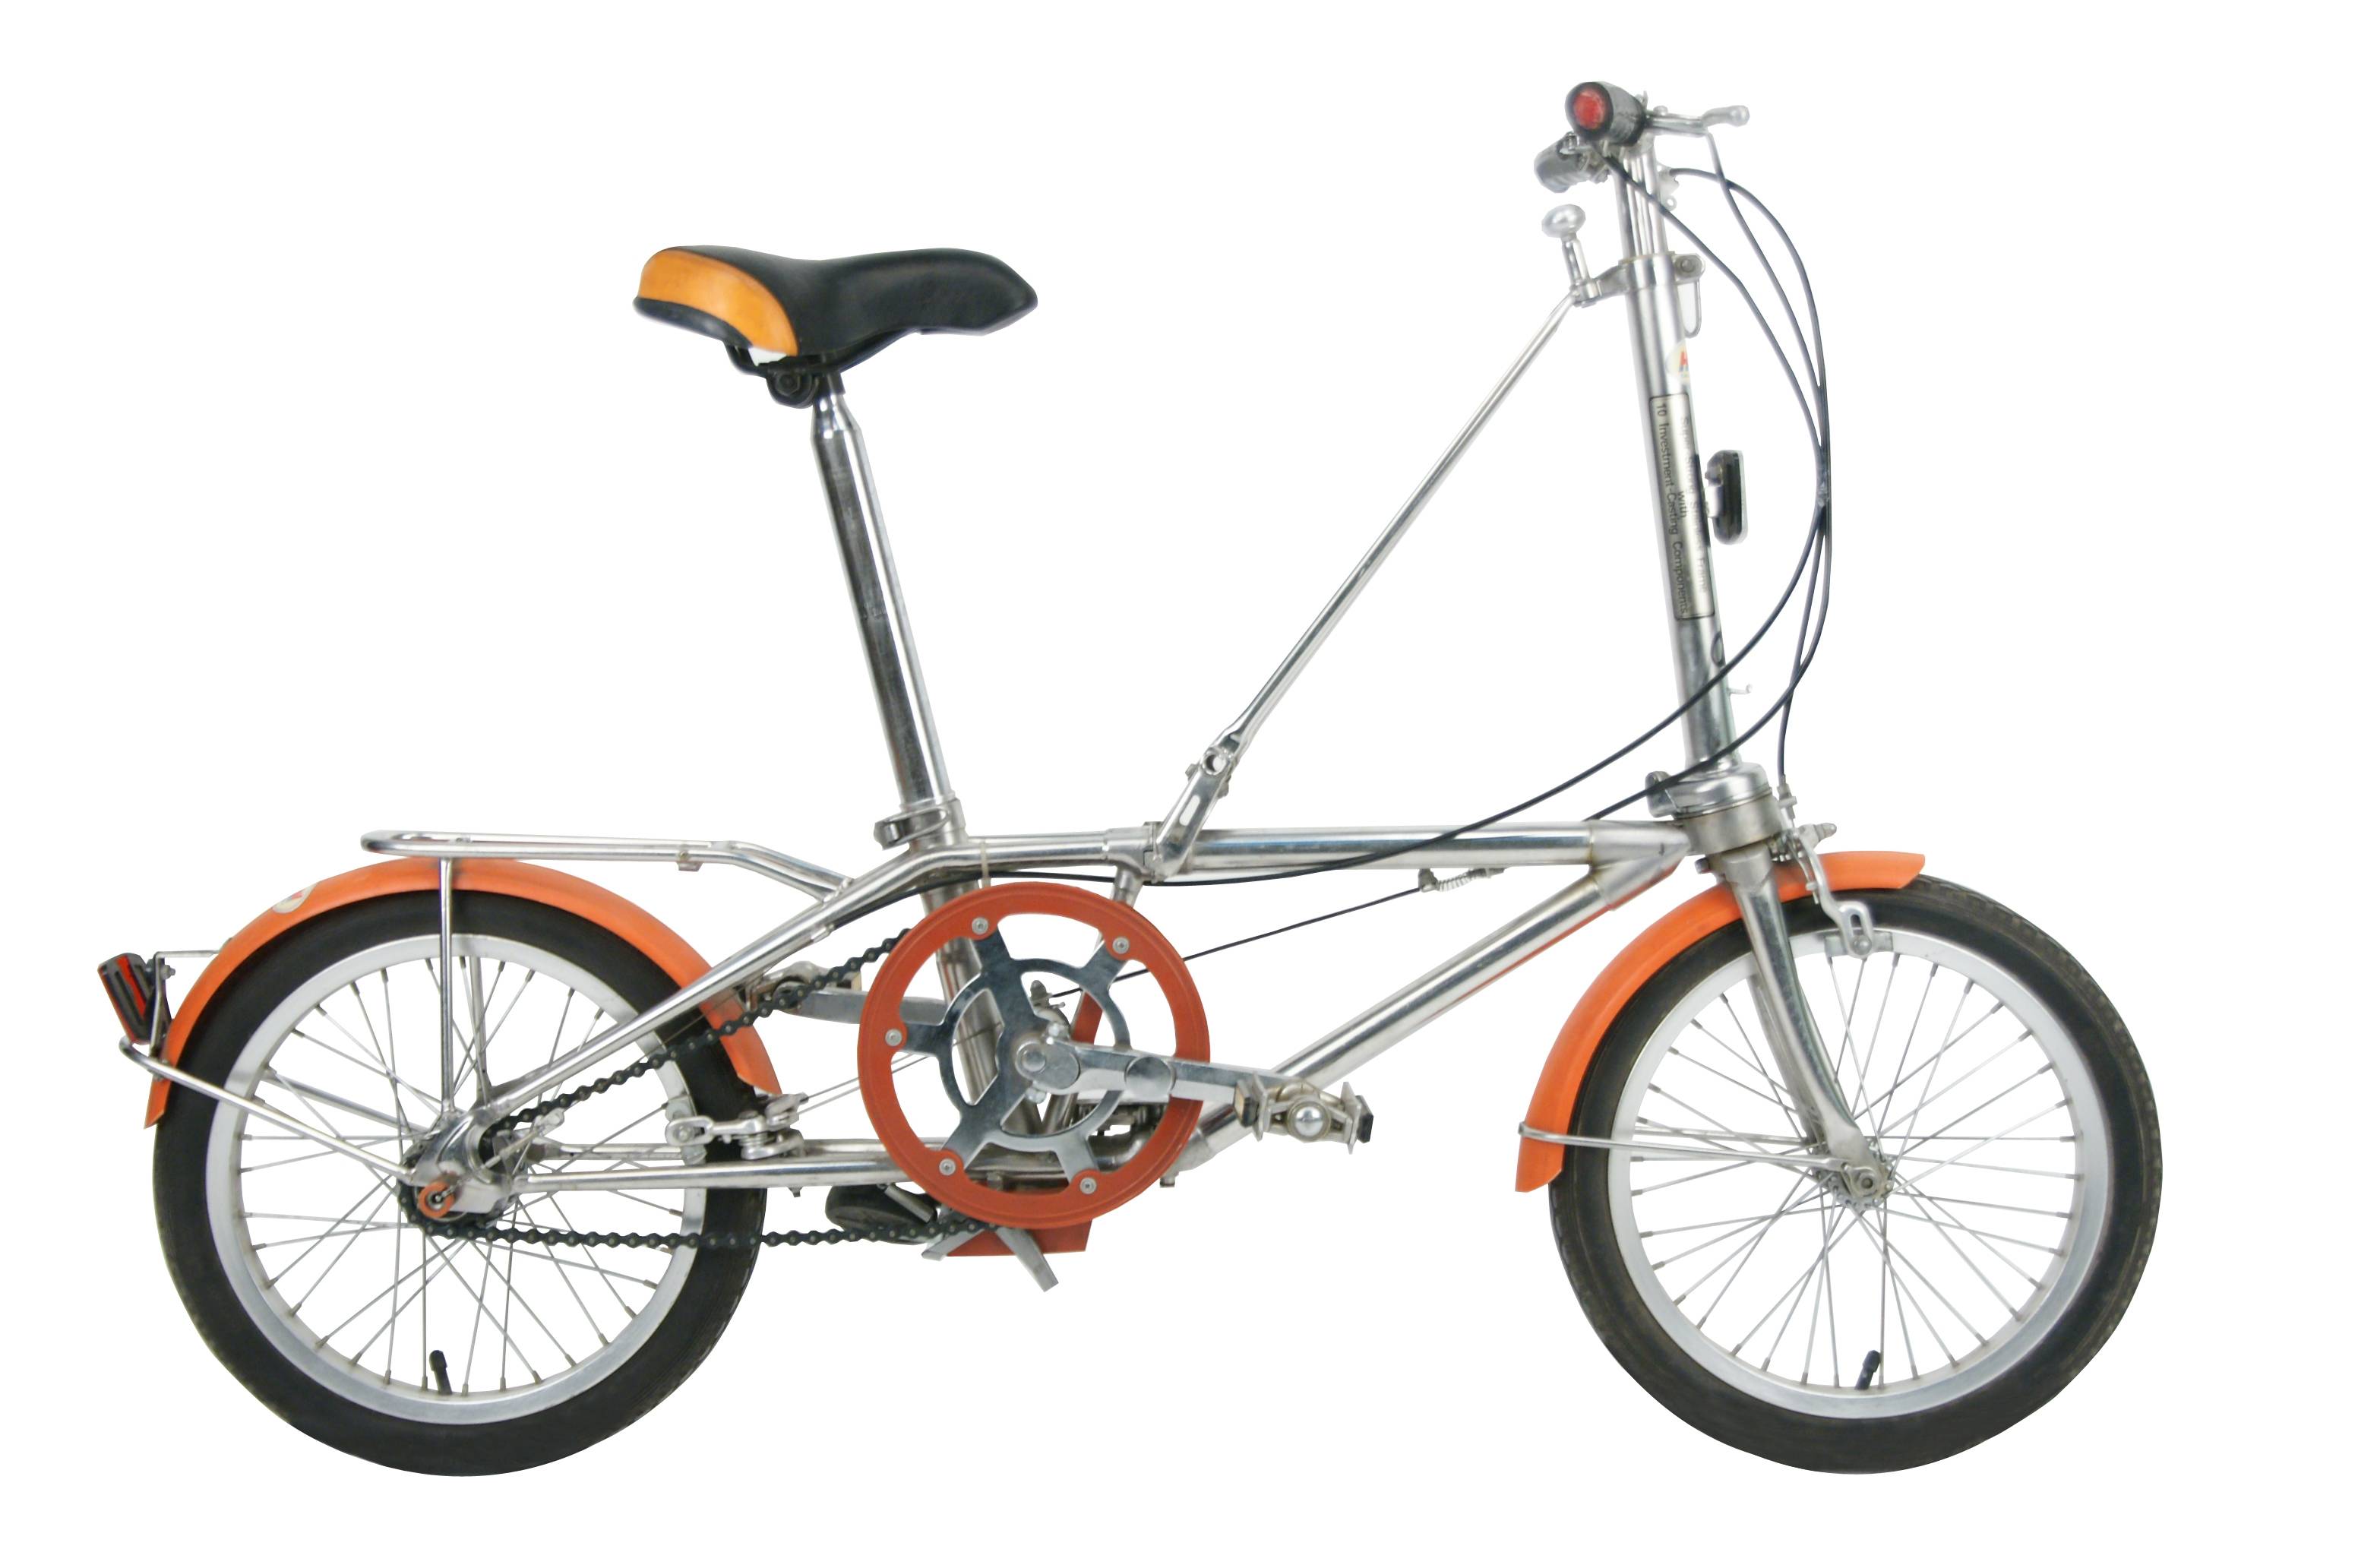 1982 Hon Convertible folding bicycle